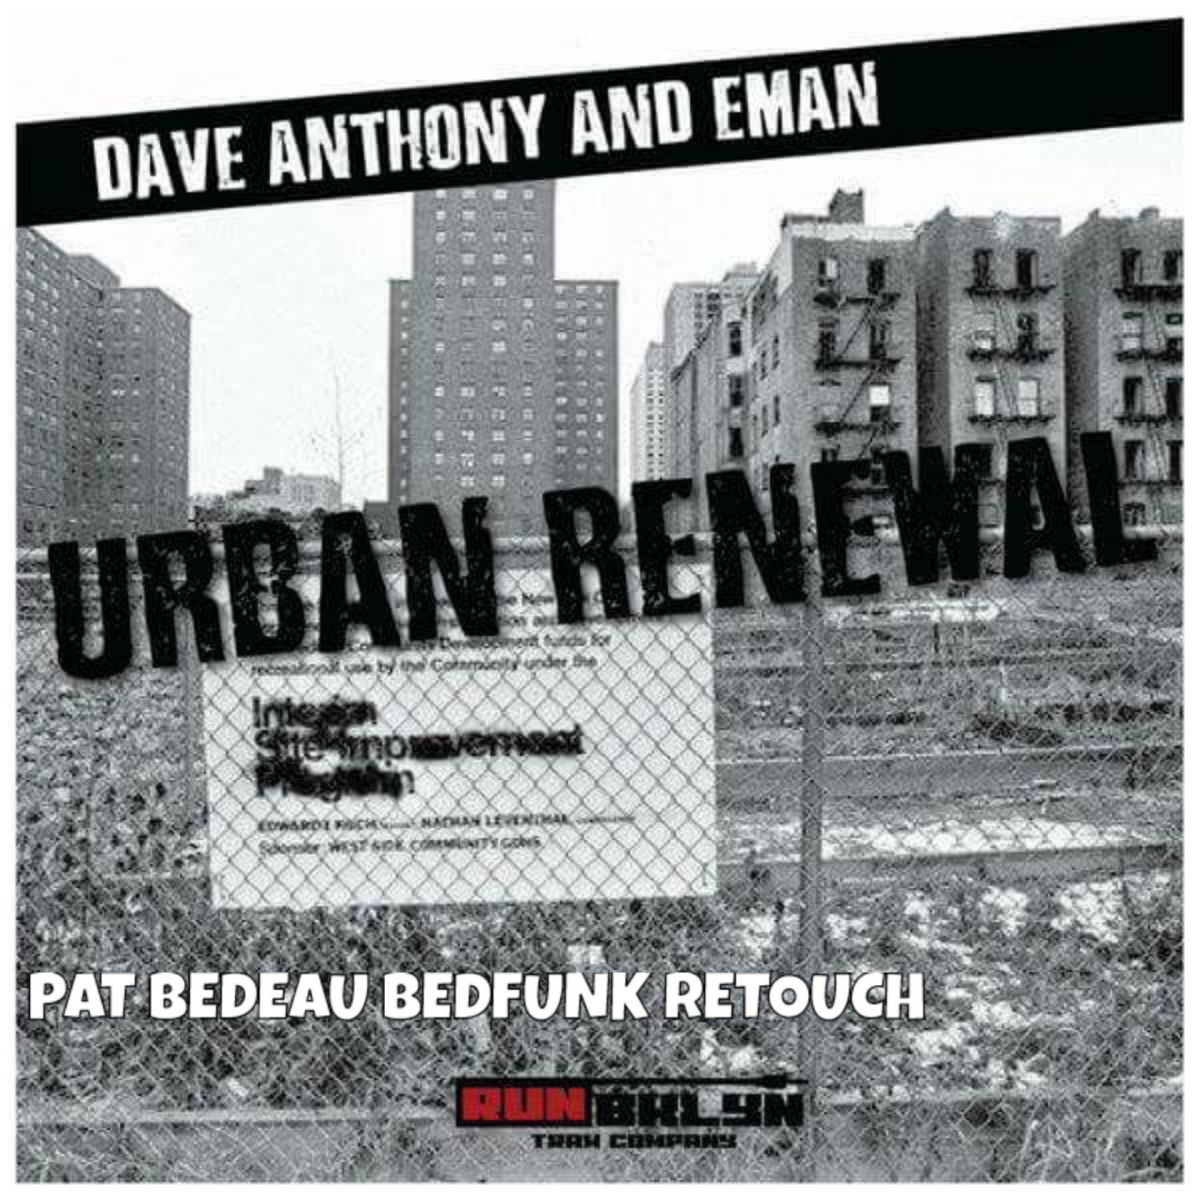 David Anthony & Eman - Urban Renewal (Pat Bedeau Bedfunk Remixes) / Run Bklyn Trax Company